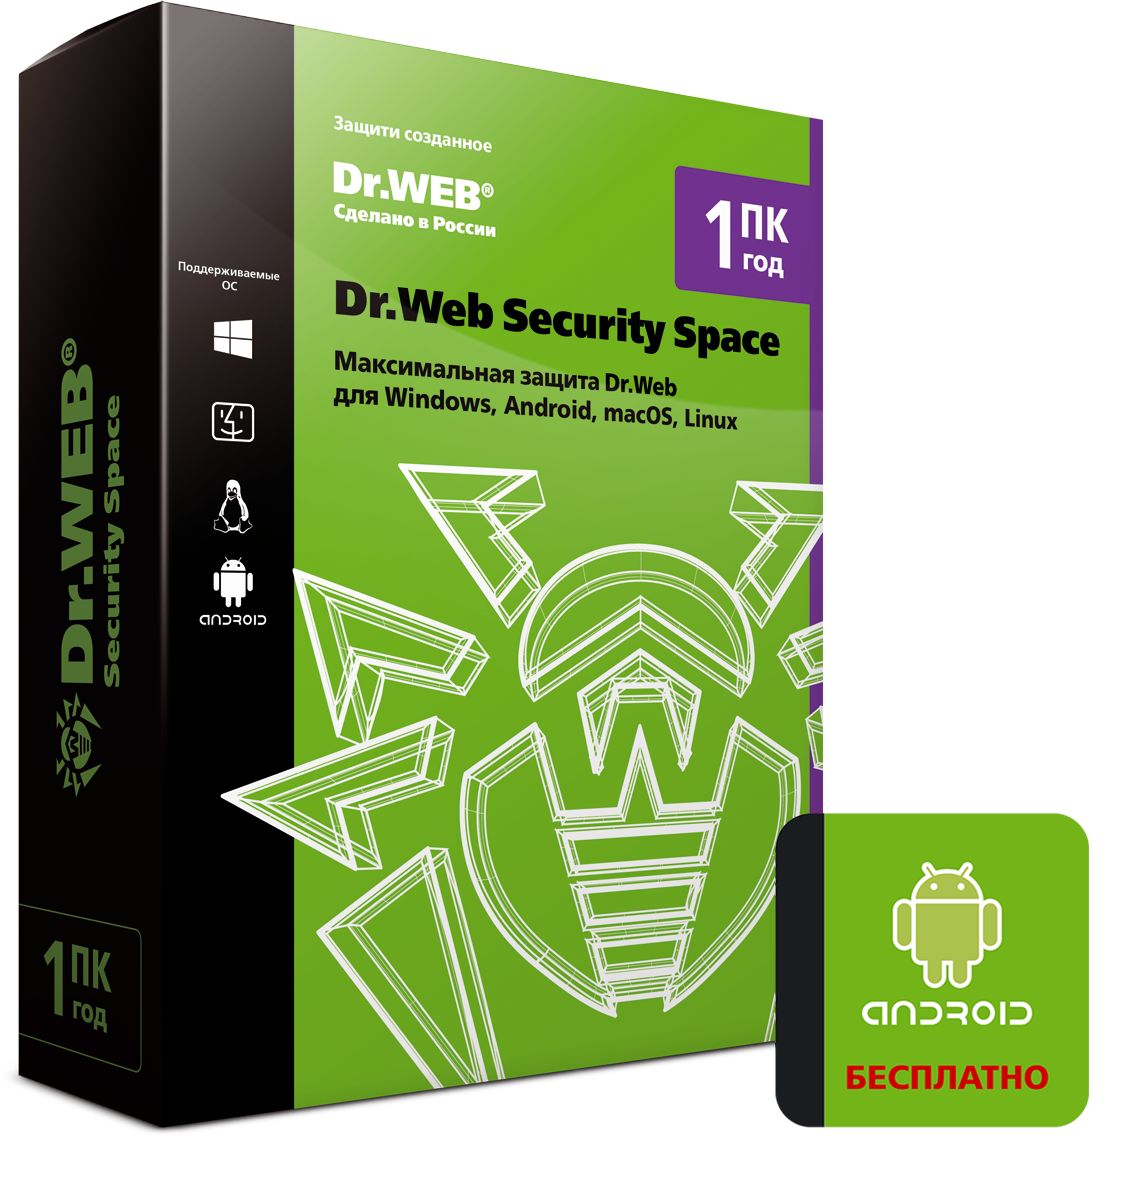 Антивирус Dr.Web Security Space на 1 год на 1 ПК [BHW-B-12M-1-A3] (Box) dr web security space продление 5 пк 5 моб устр 1 год [цифровая версия] цифровая версия